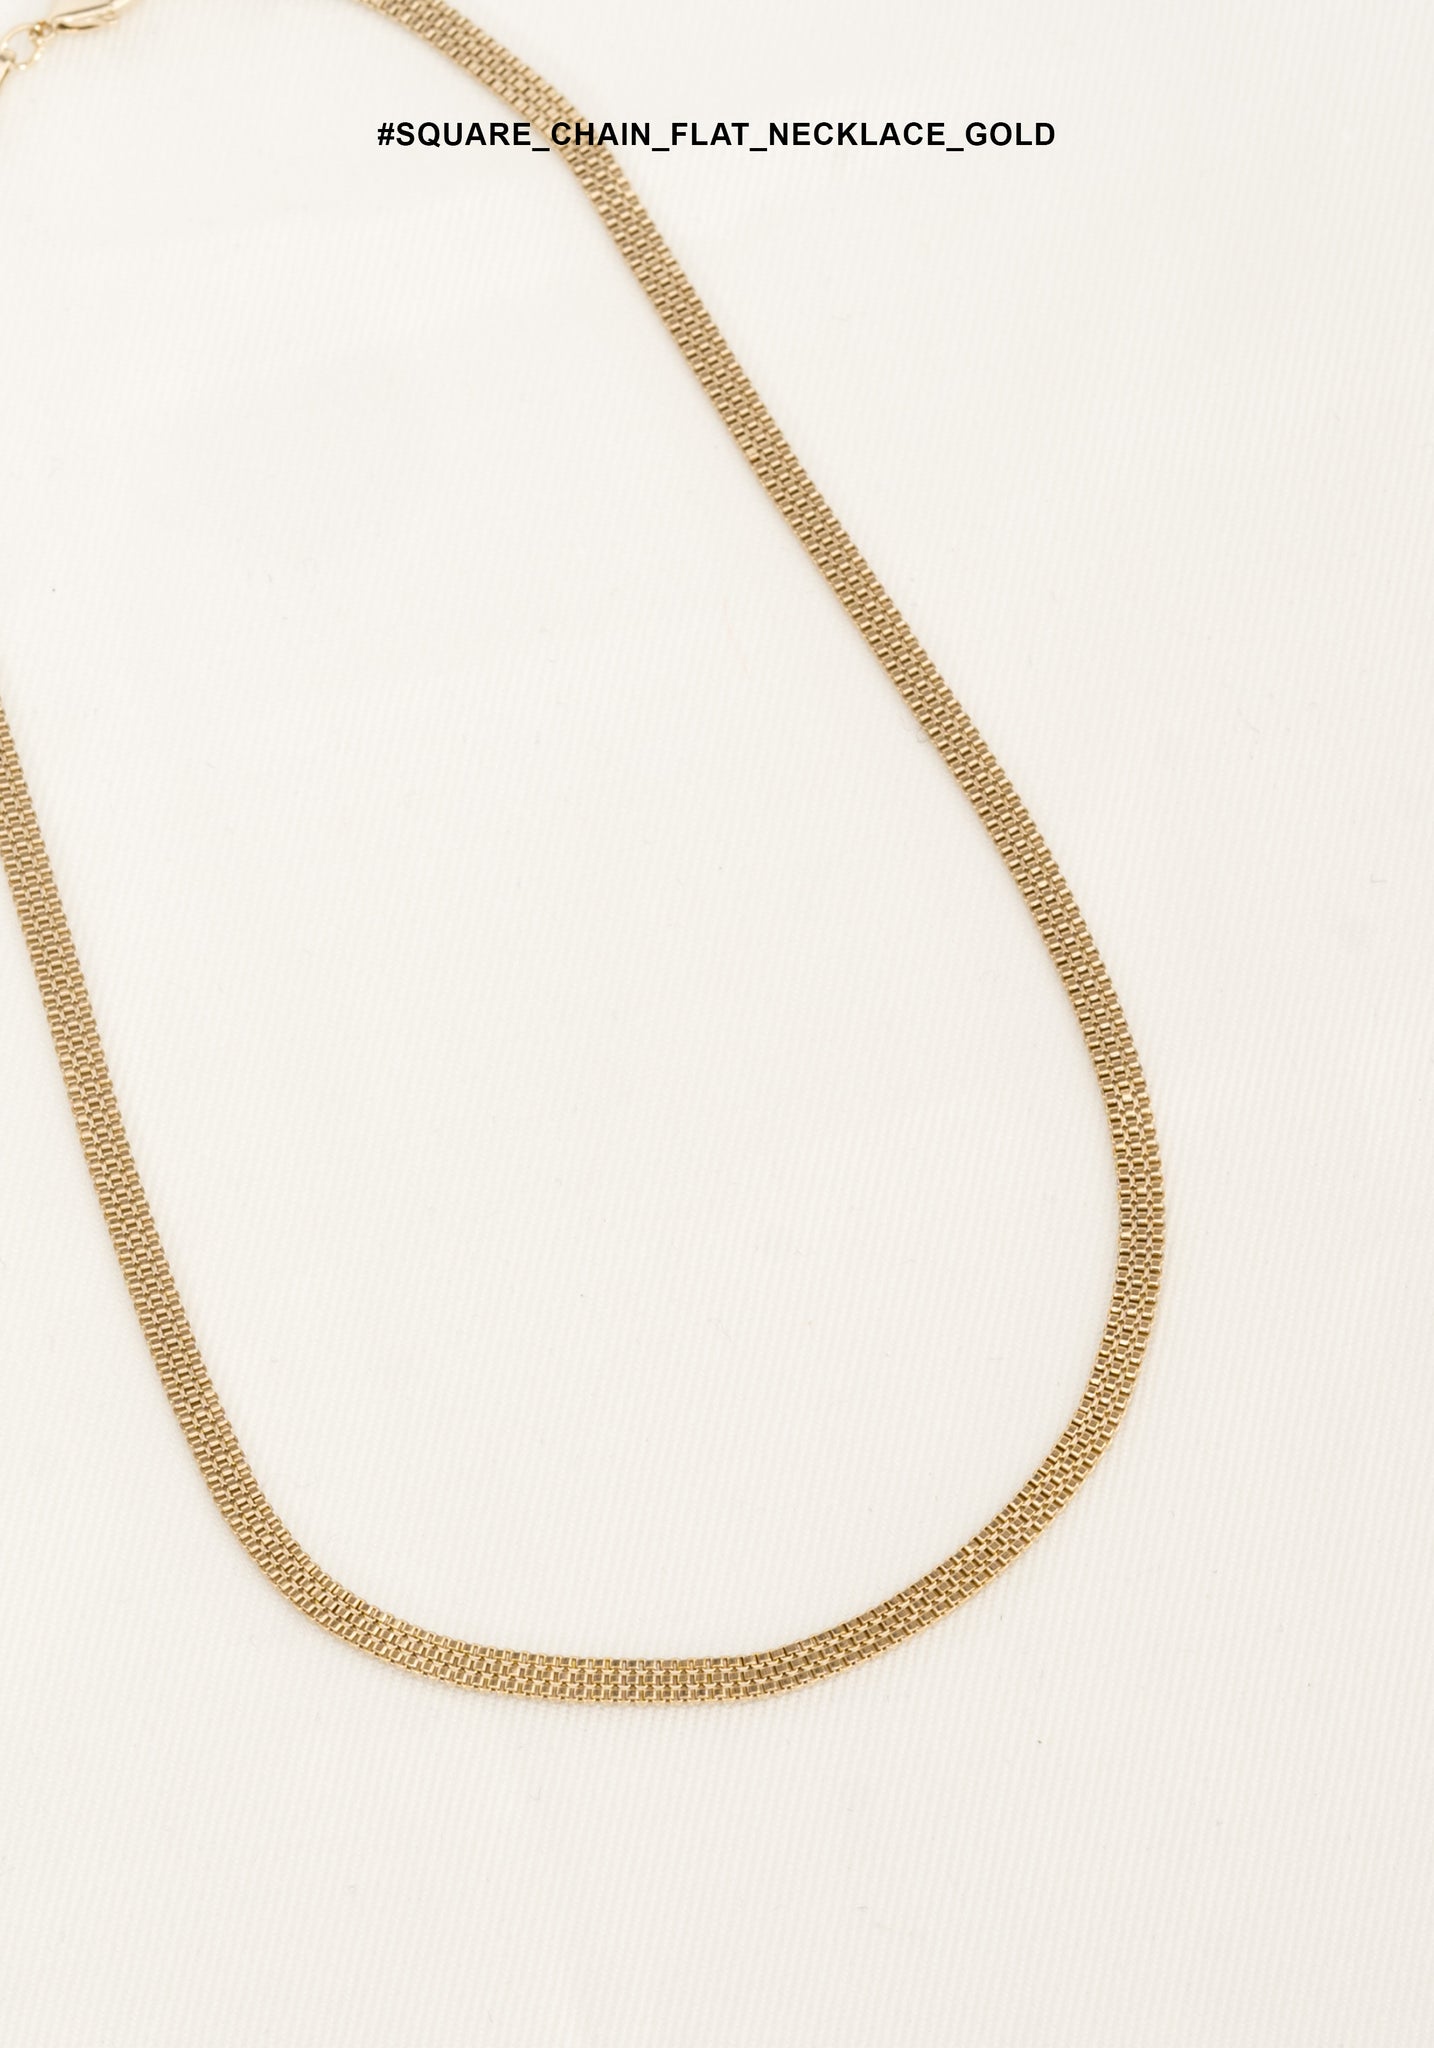 Square Chain Flat Necklace Gold - whoami